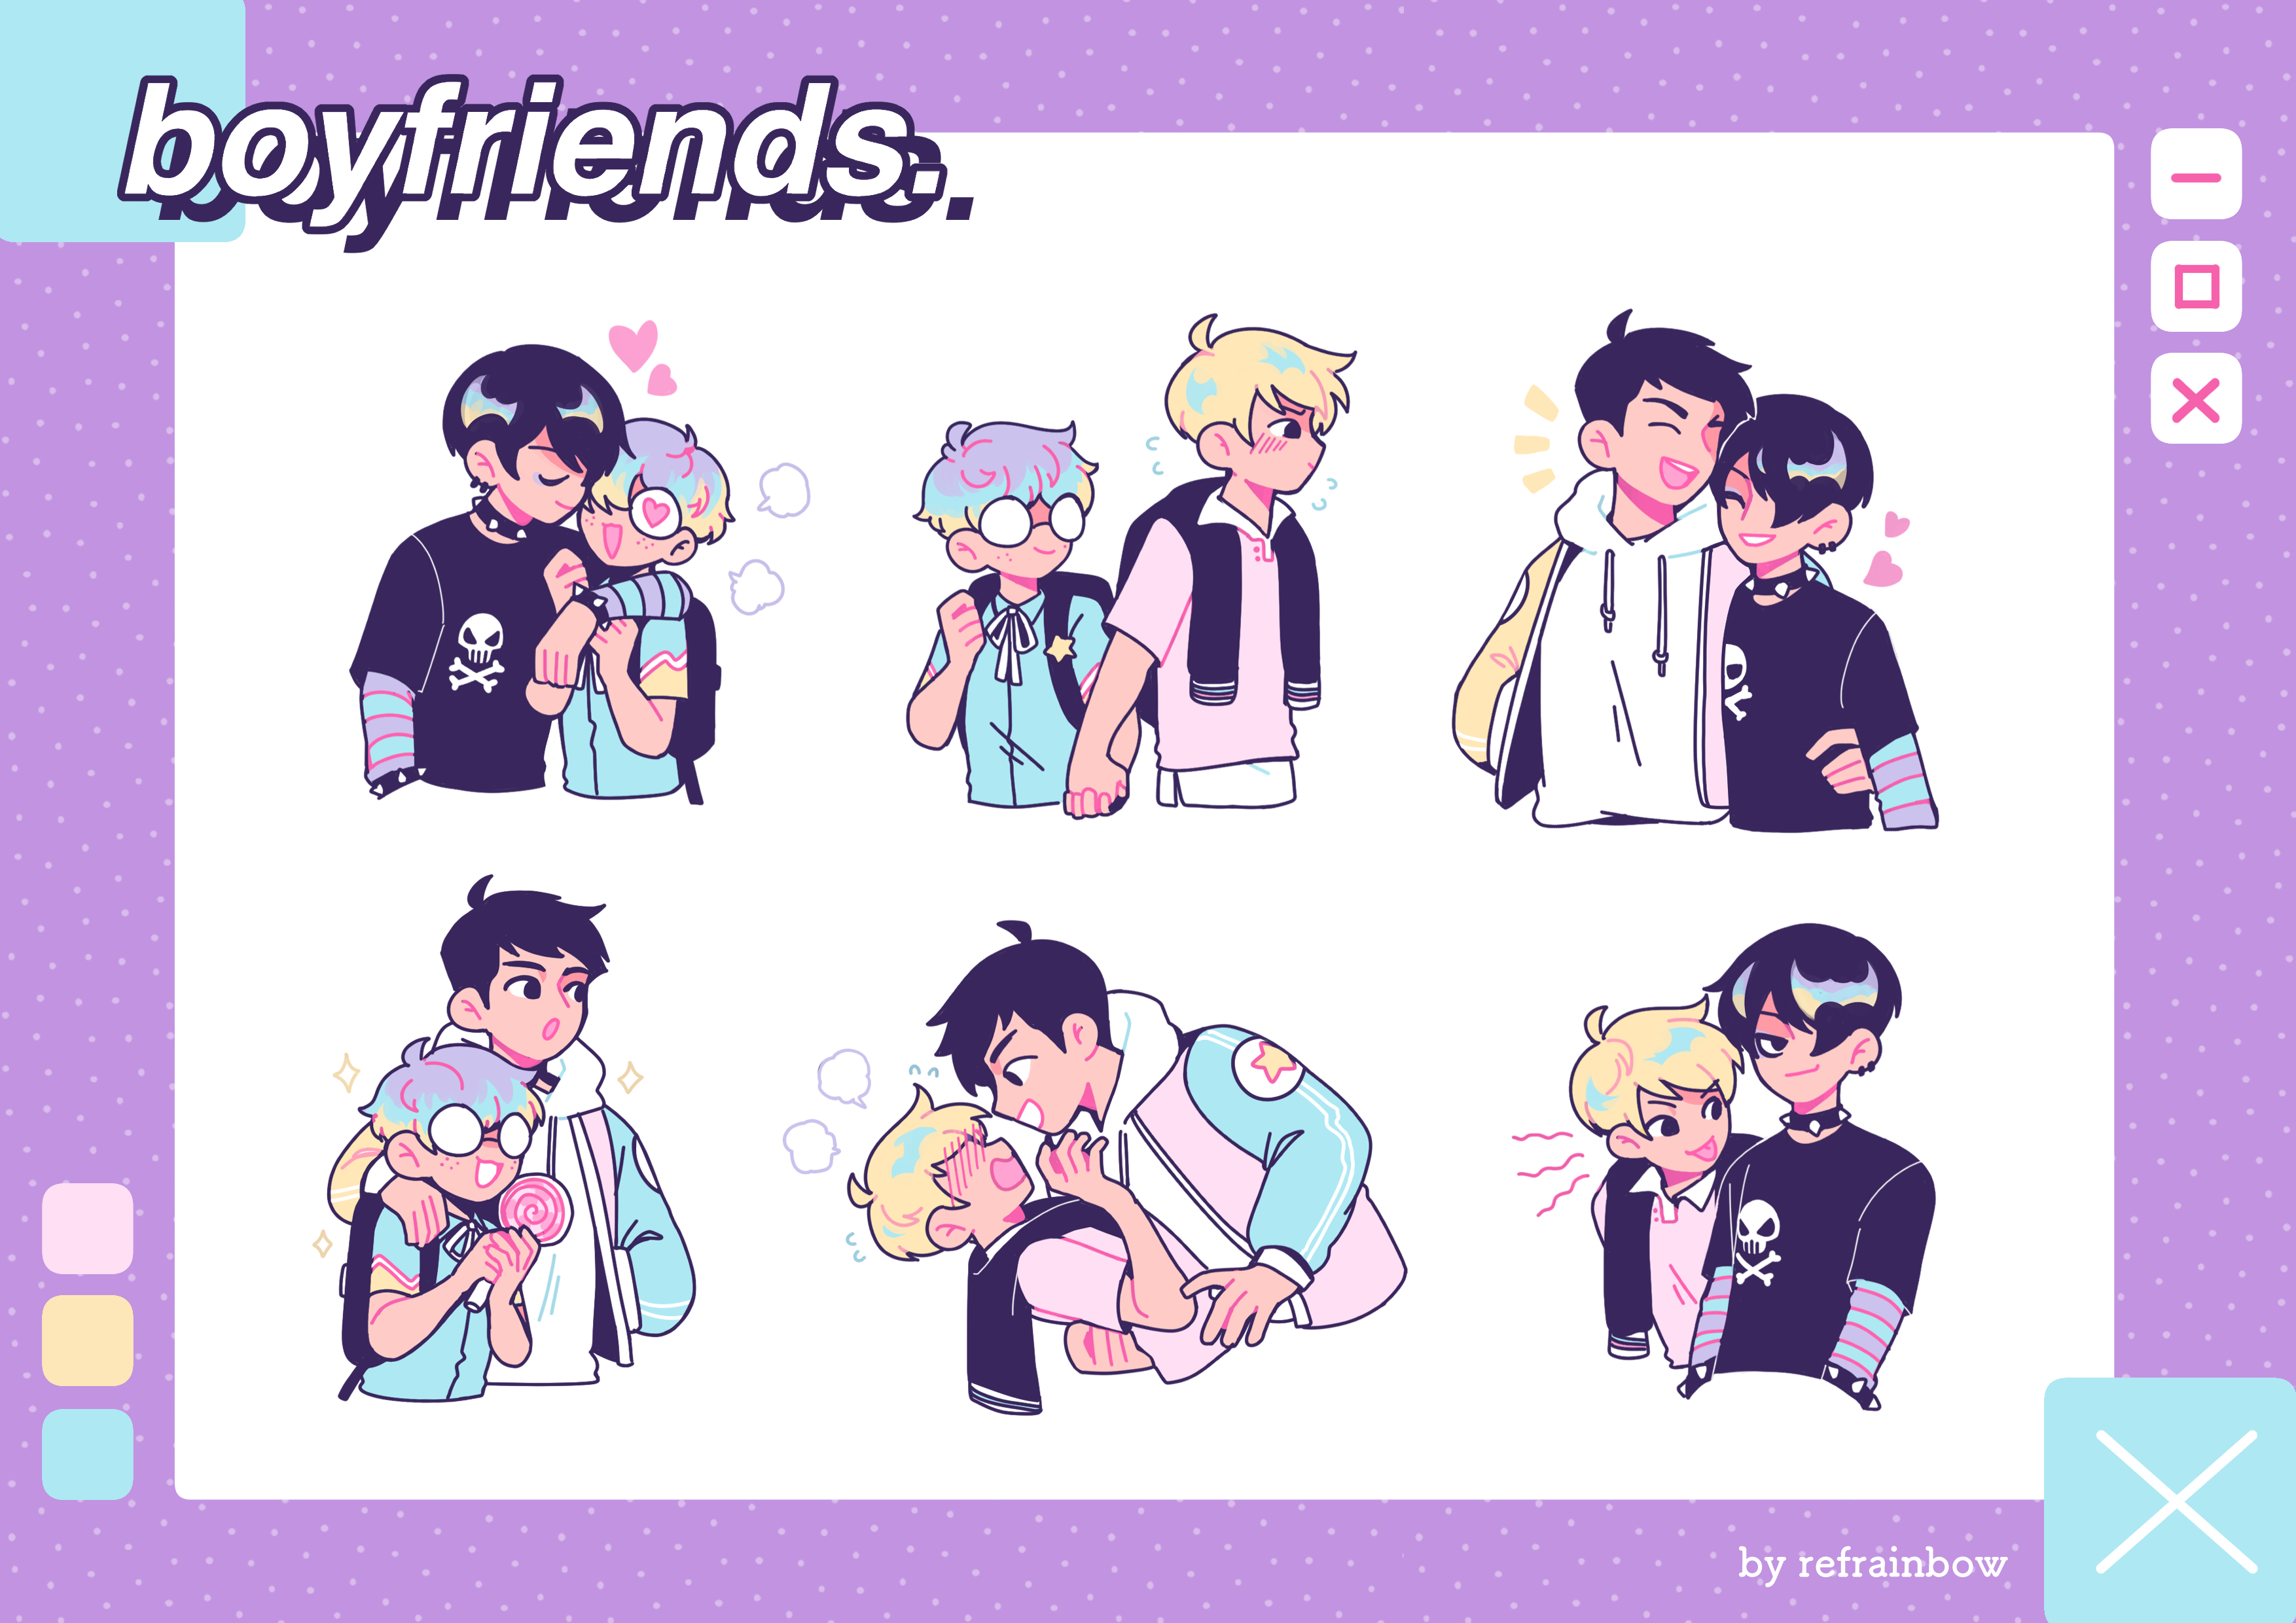 Boyfriends webtoon nsfw comic